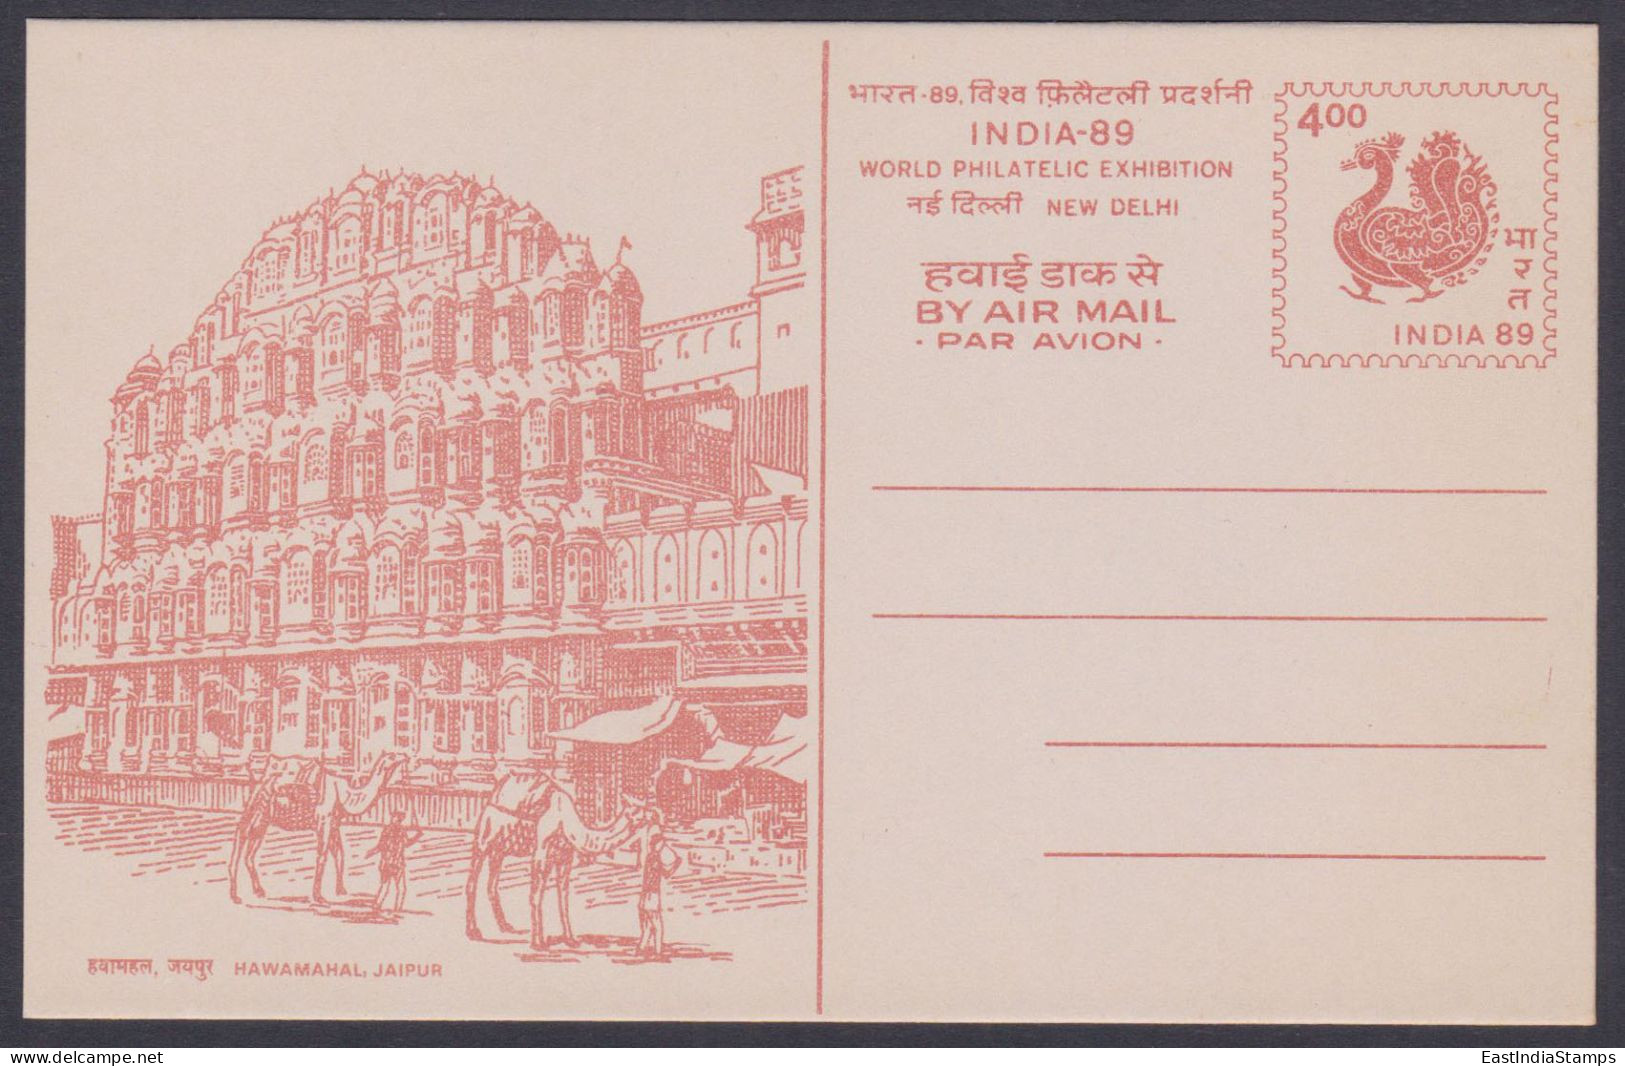 Inde India 1989 Mint Postcard World Philatelic Exhibition, Stamp, Hawa Mahal, Jaipur, Rajput, Architecture, Monument - India